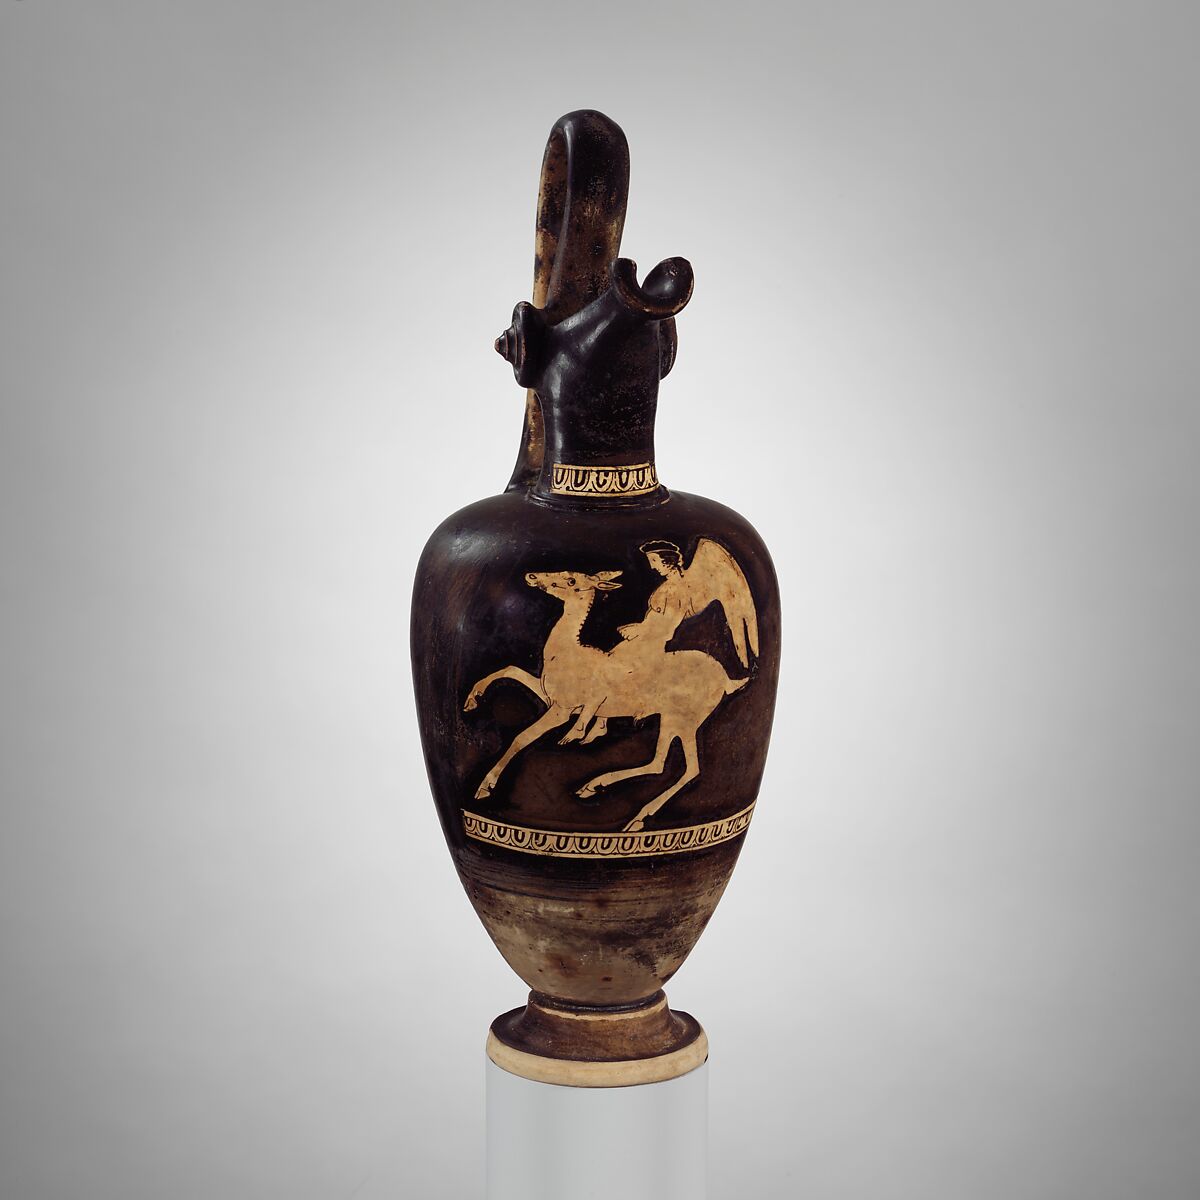 Terracotta oinochoe (jug), Attributed to Polion, Terracotta, Greek, Attic 